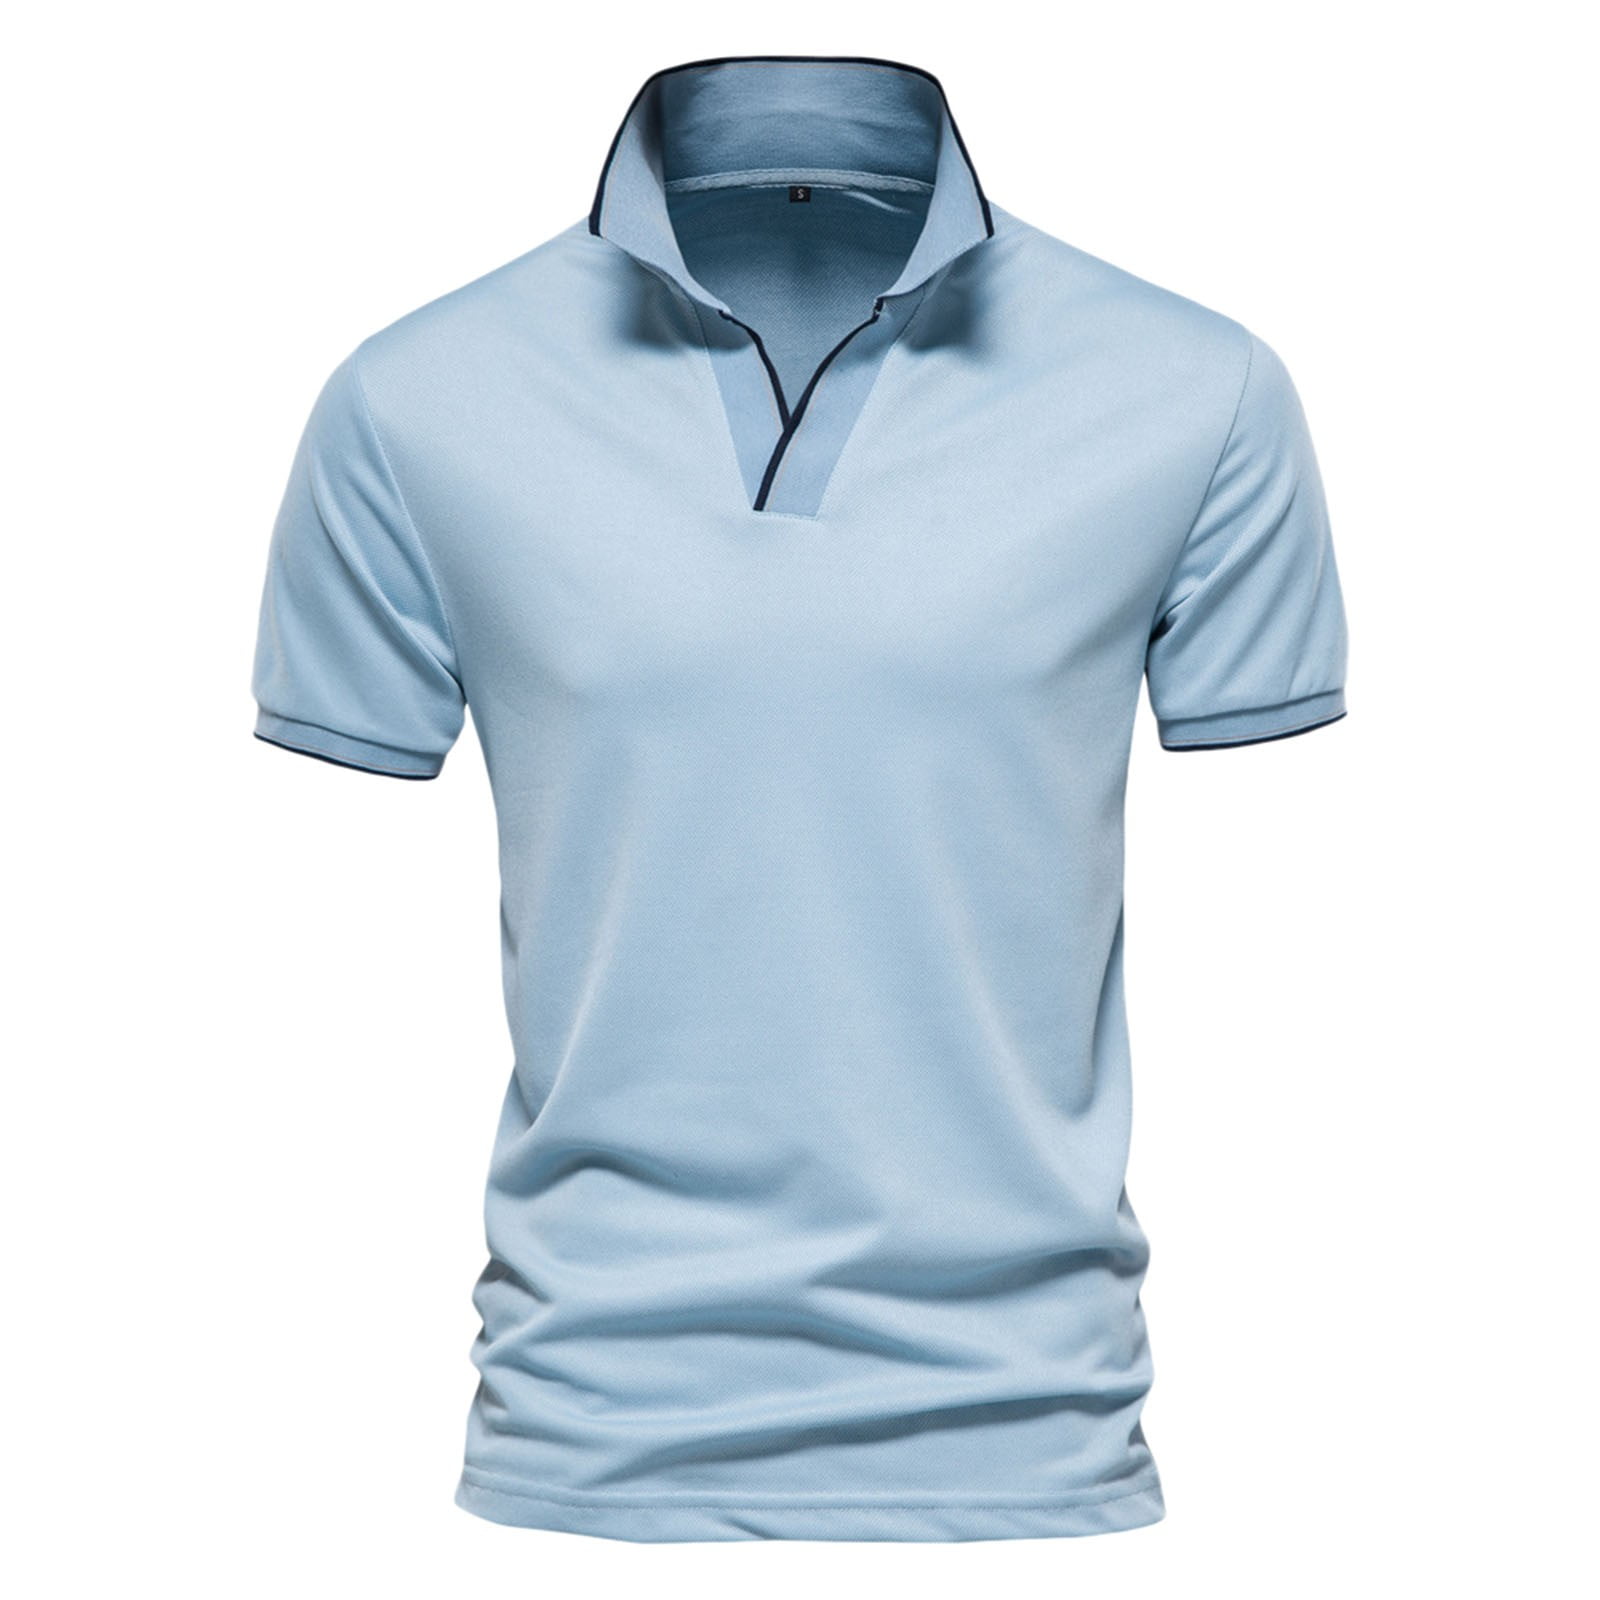 B91xZ Shirts for Men Short Sleeve Regular Fit Shirt,Blue M